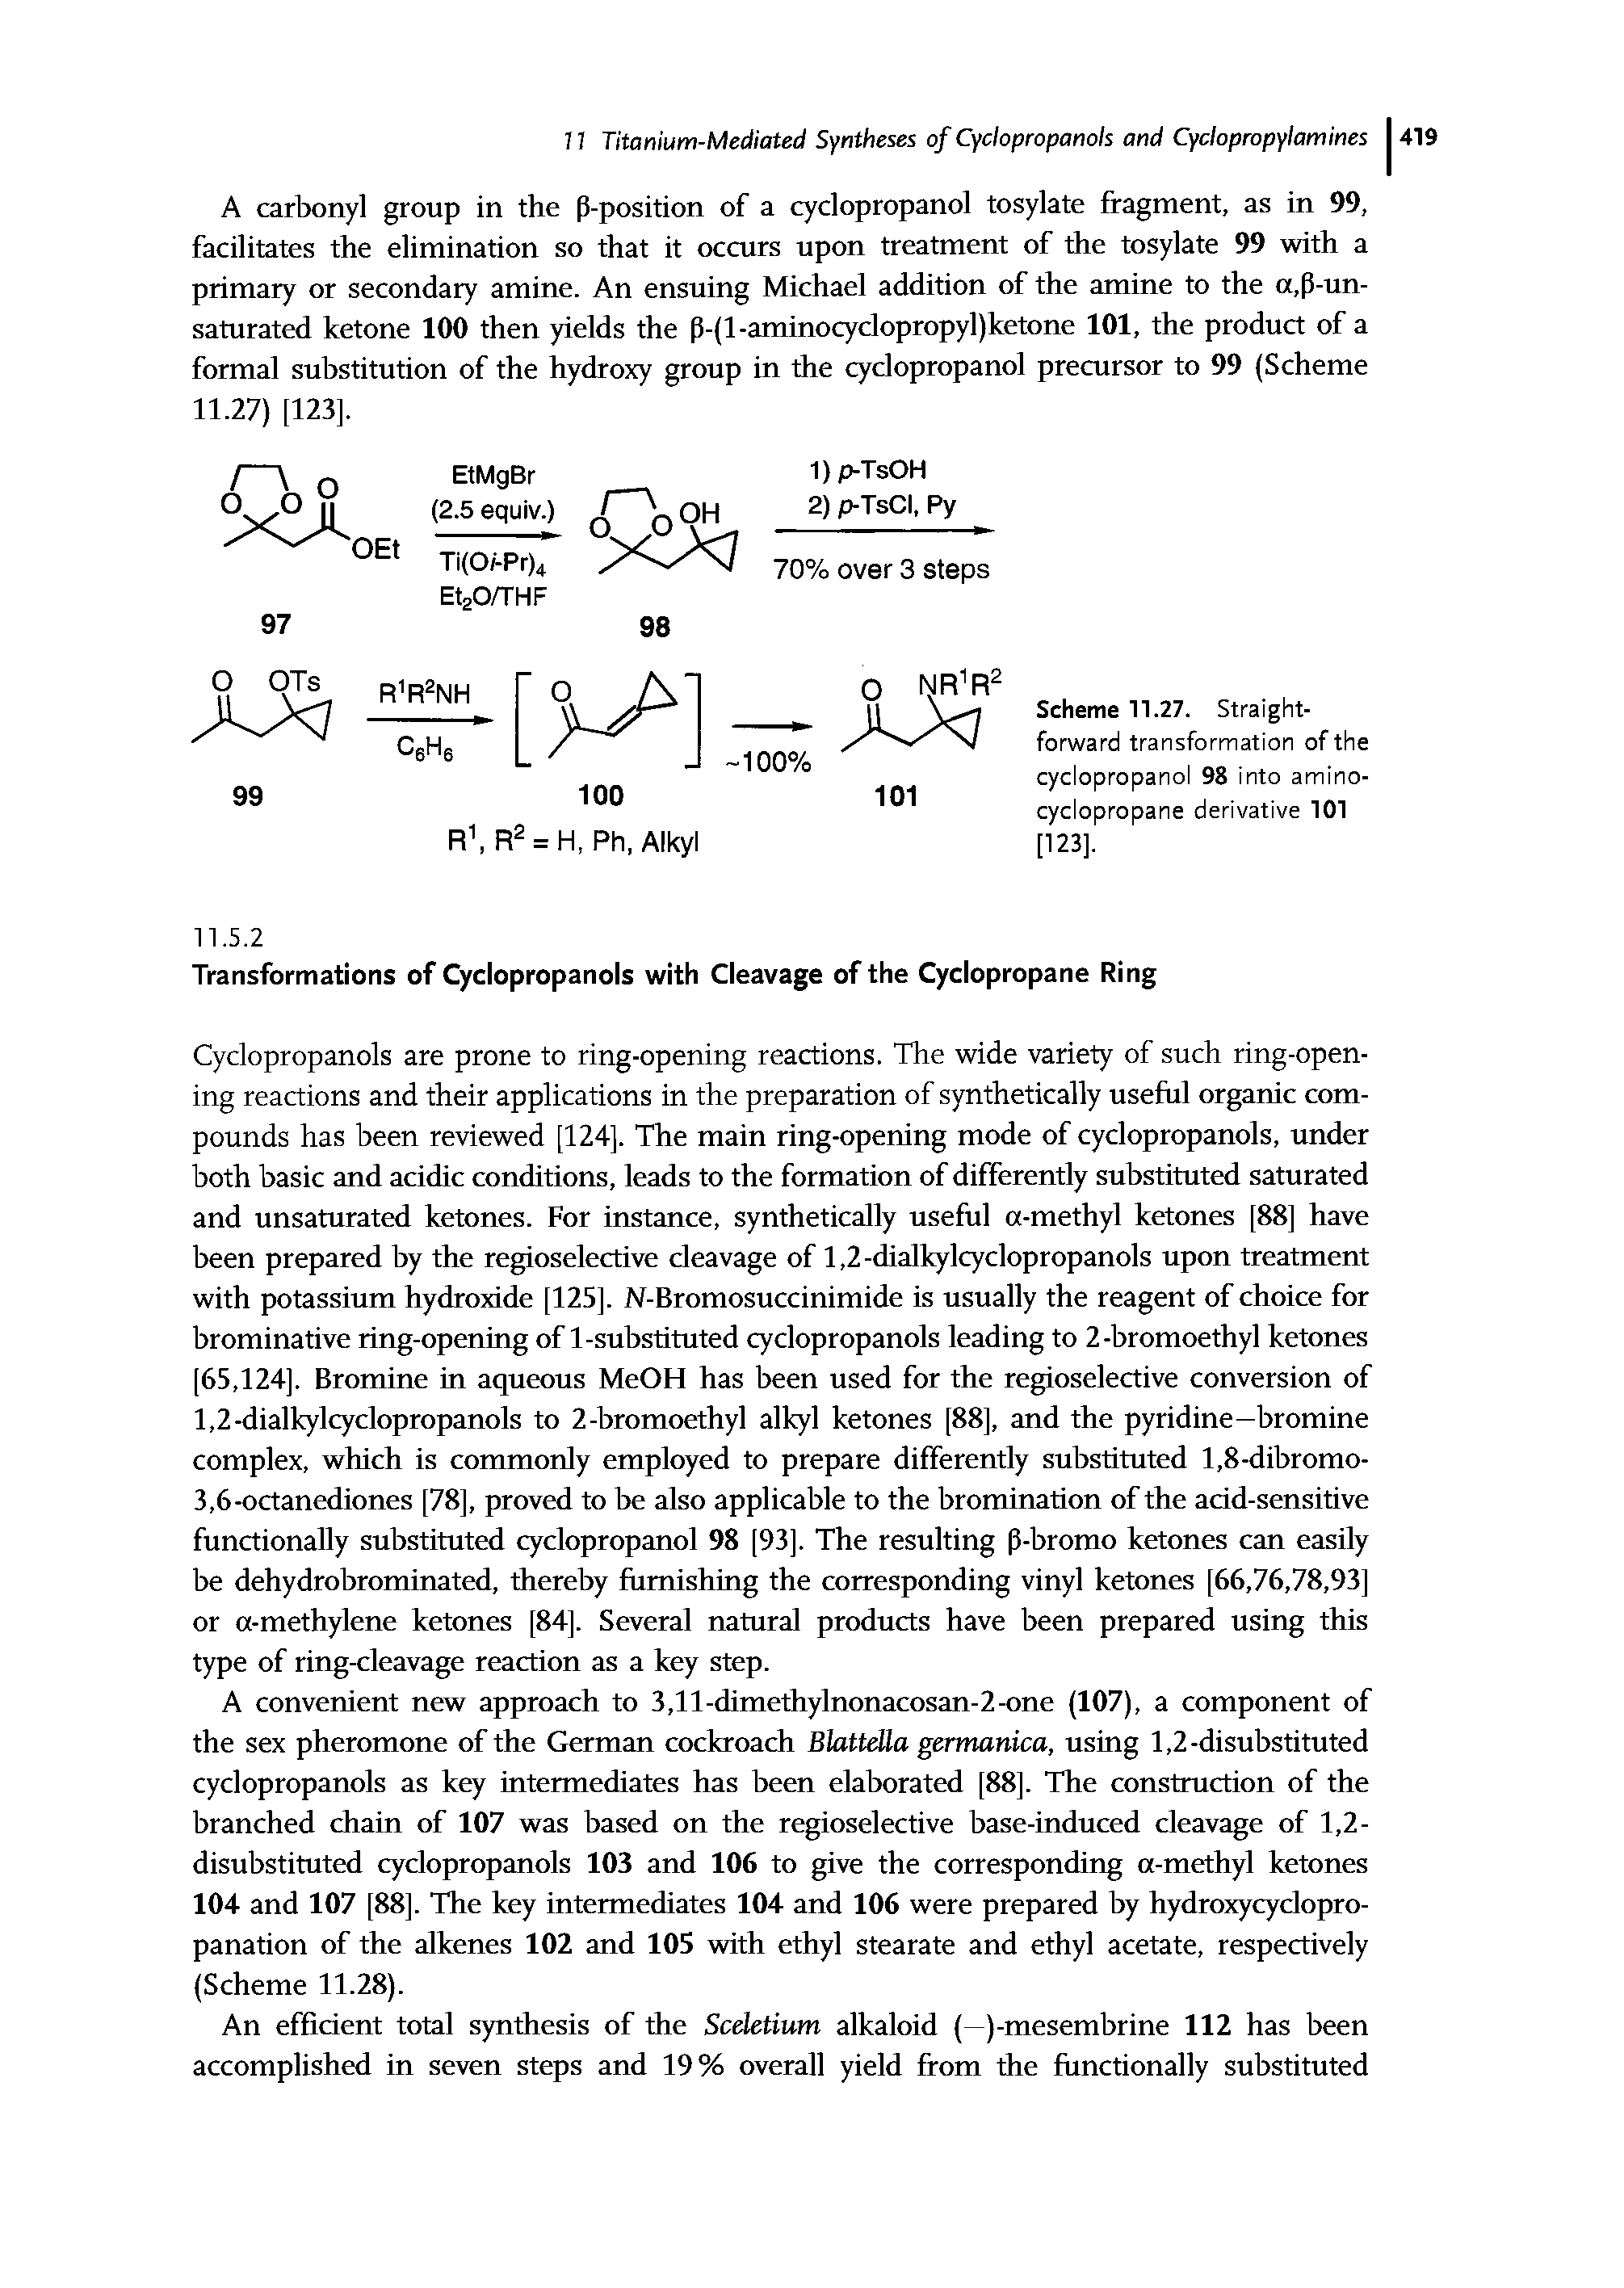 Scheme 11.27. Straightforward transformation of the cyclopropanol 98 into amino-cyclopropane derivative 101 [123].